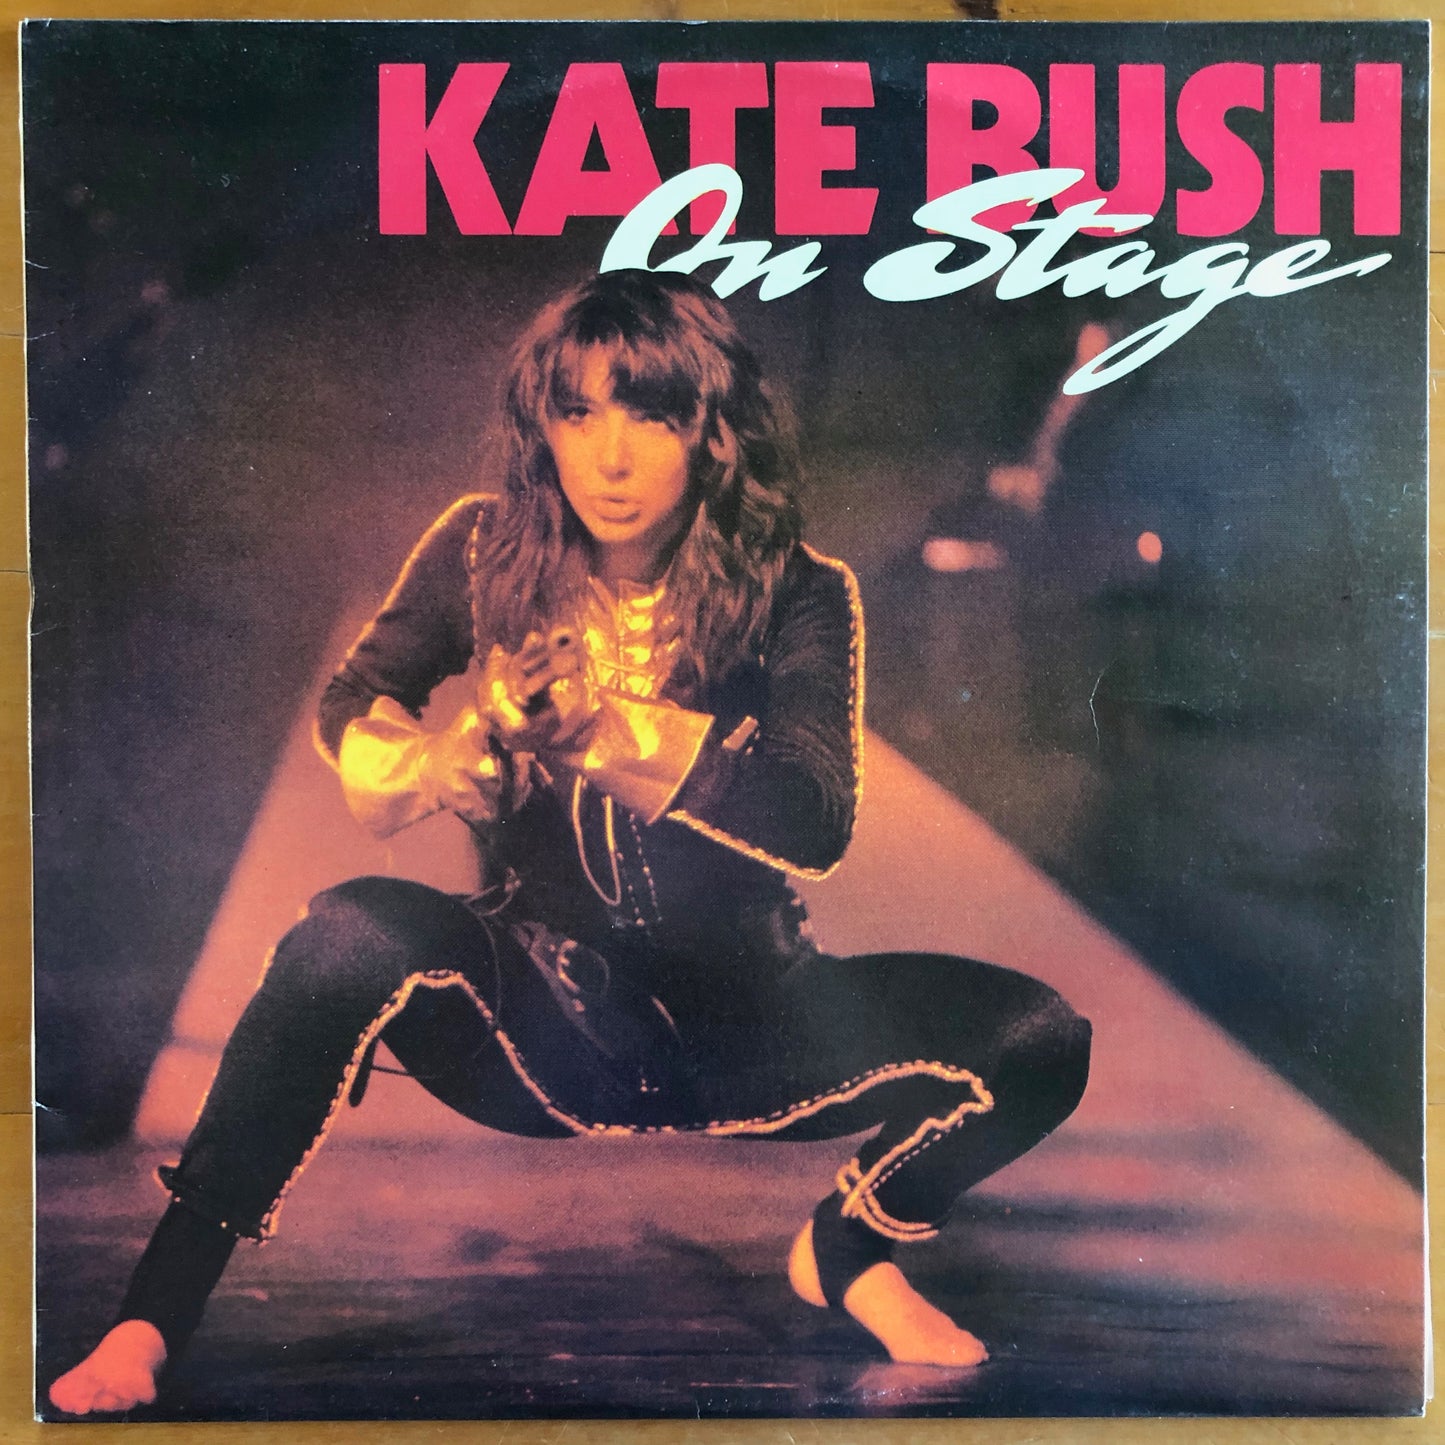 Kate Bush - On Stage (12" EP)